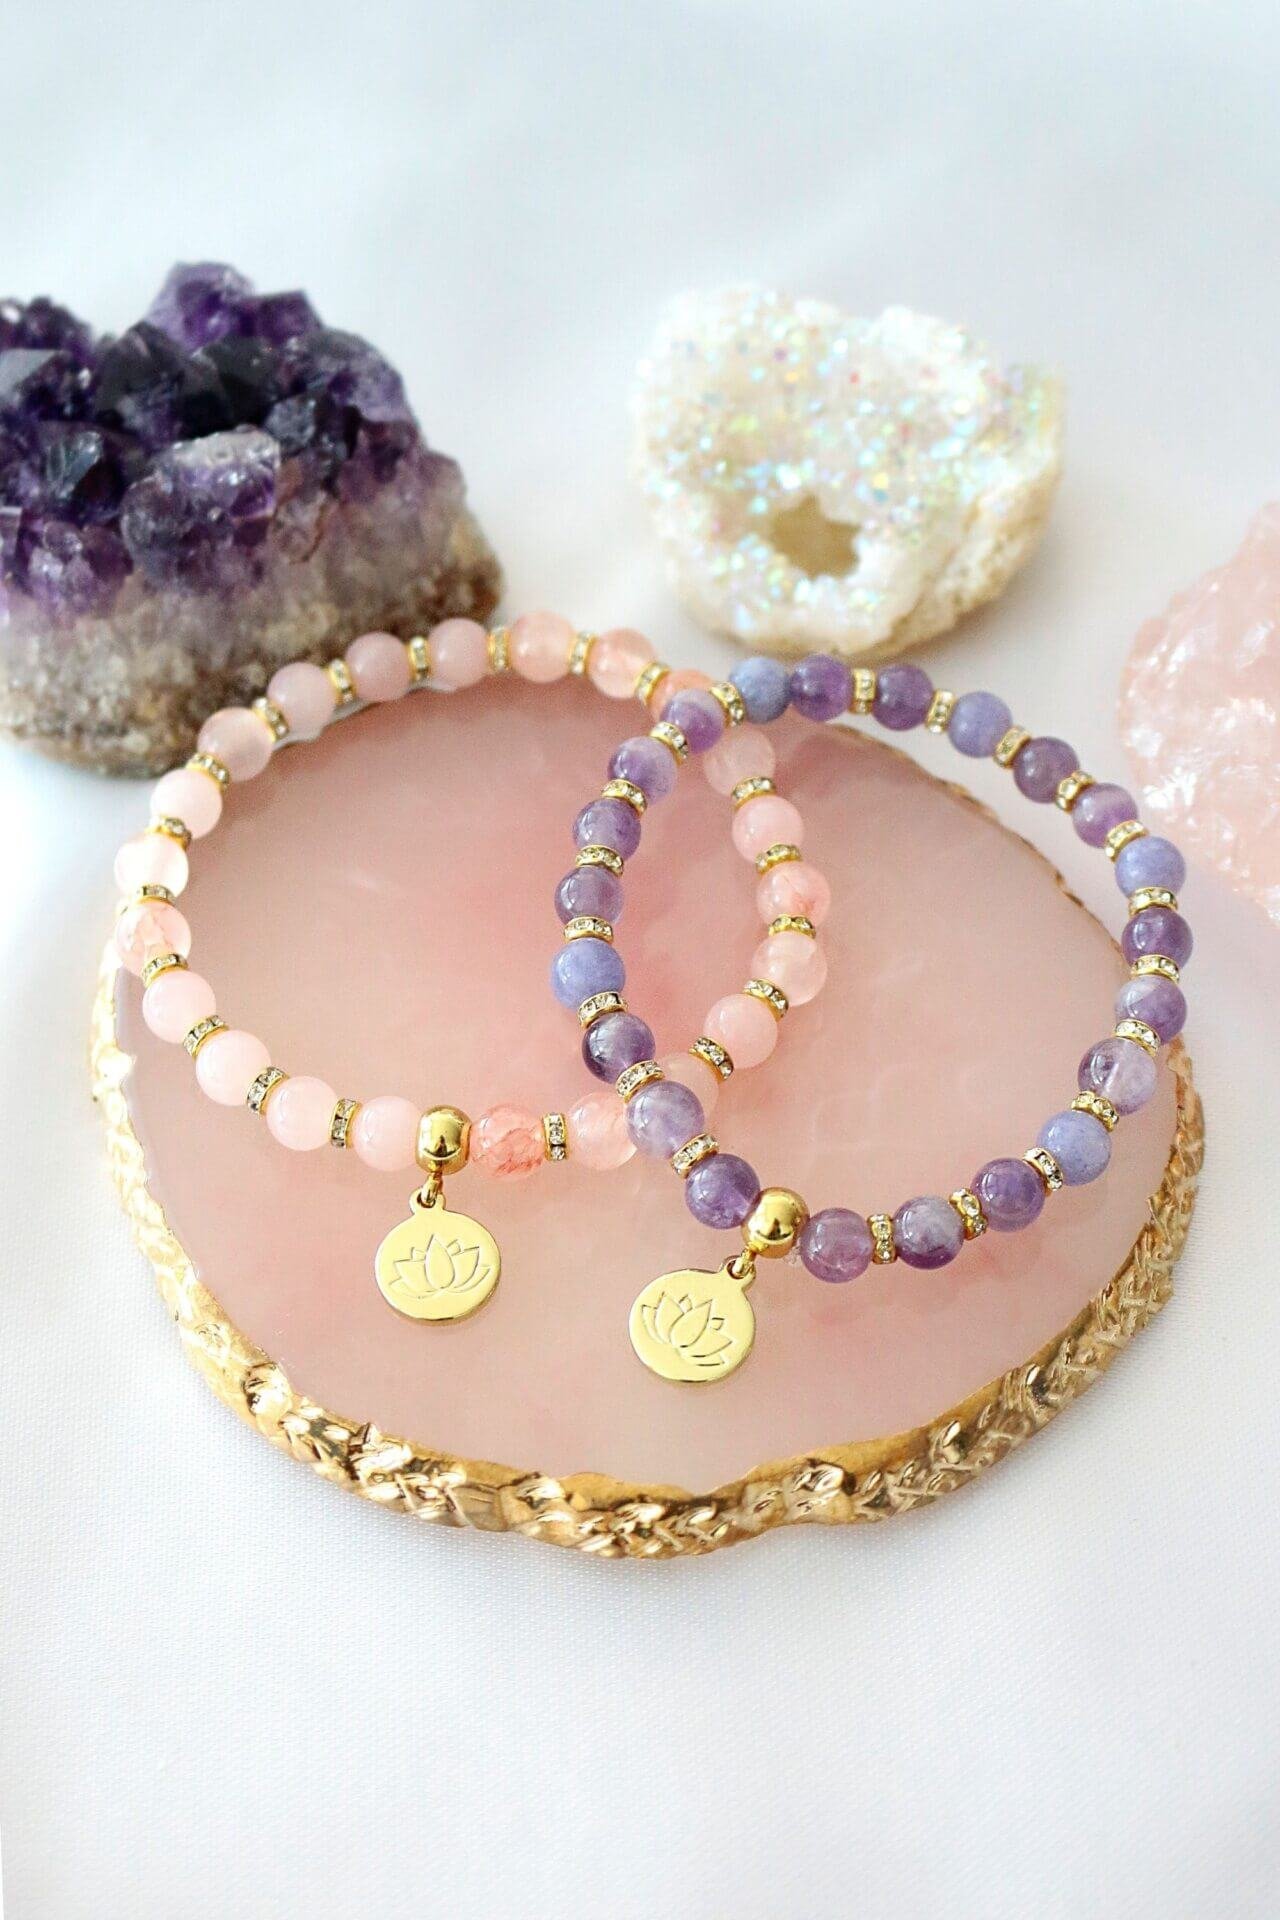 Pink Quartz Flower Bead Bracelet